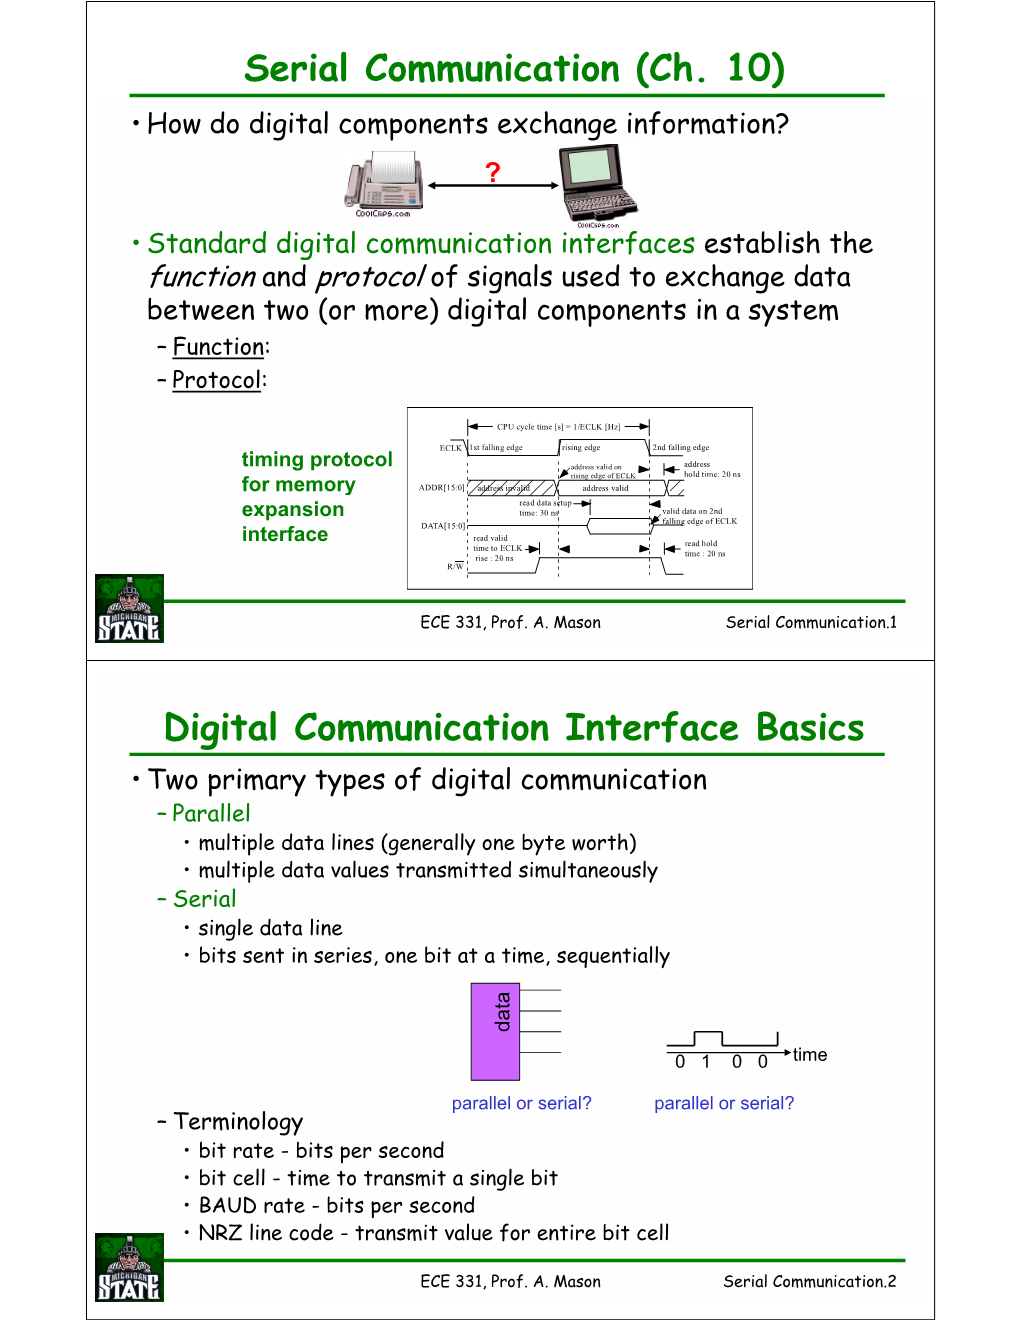 Serial Communication (Ch. 10) Digital Communication Interface Basics